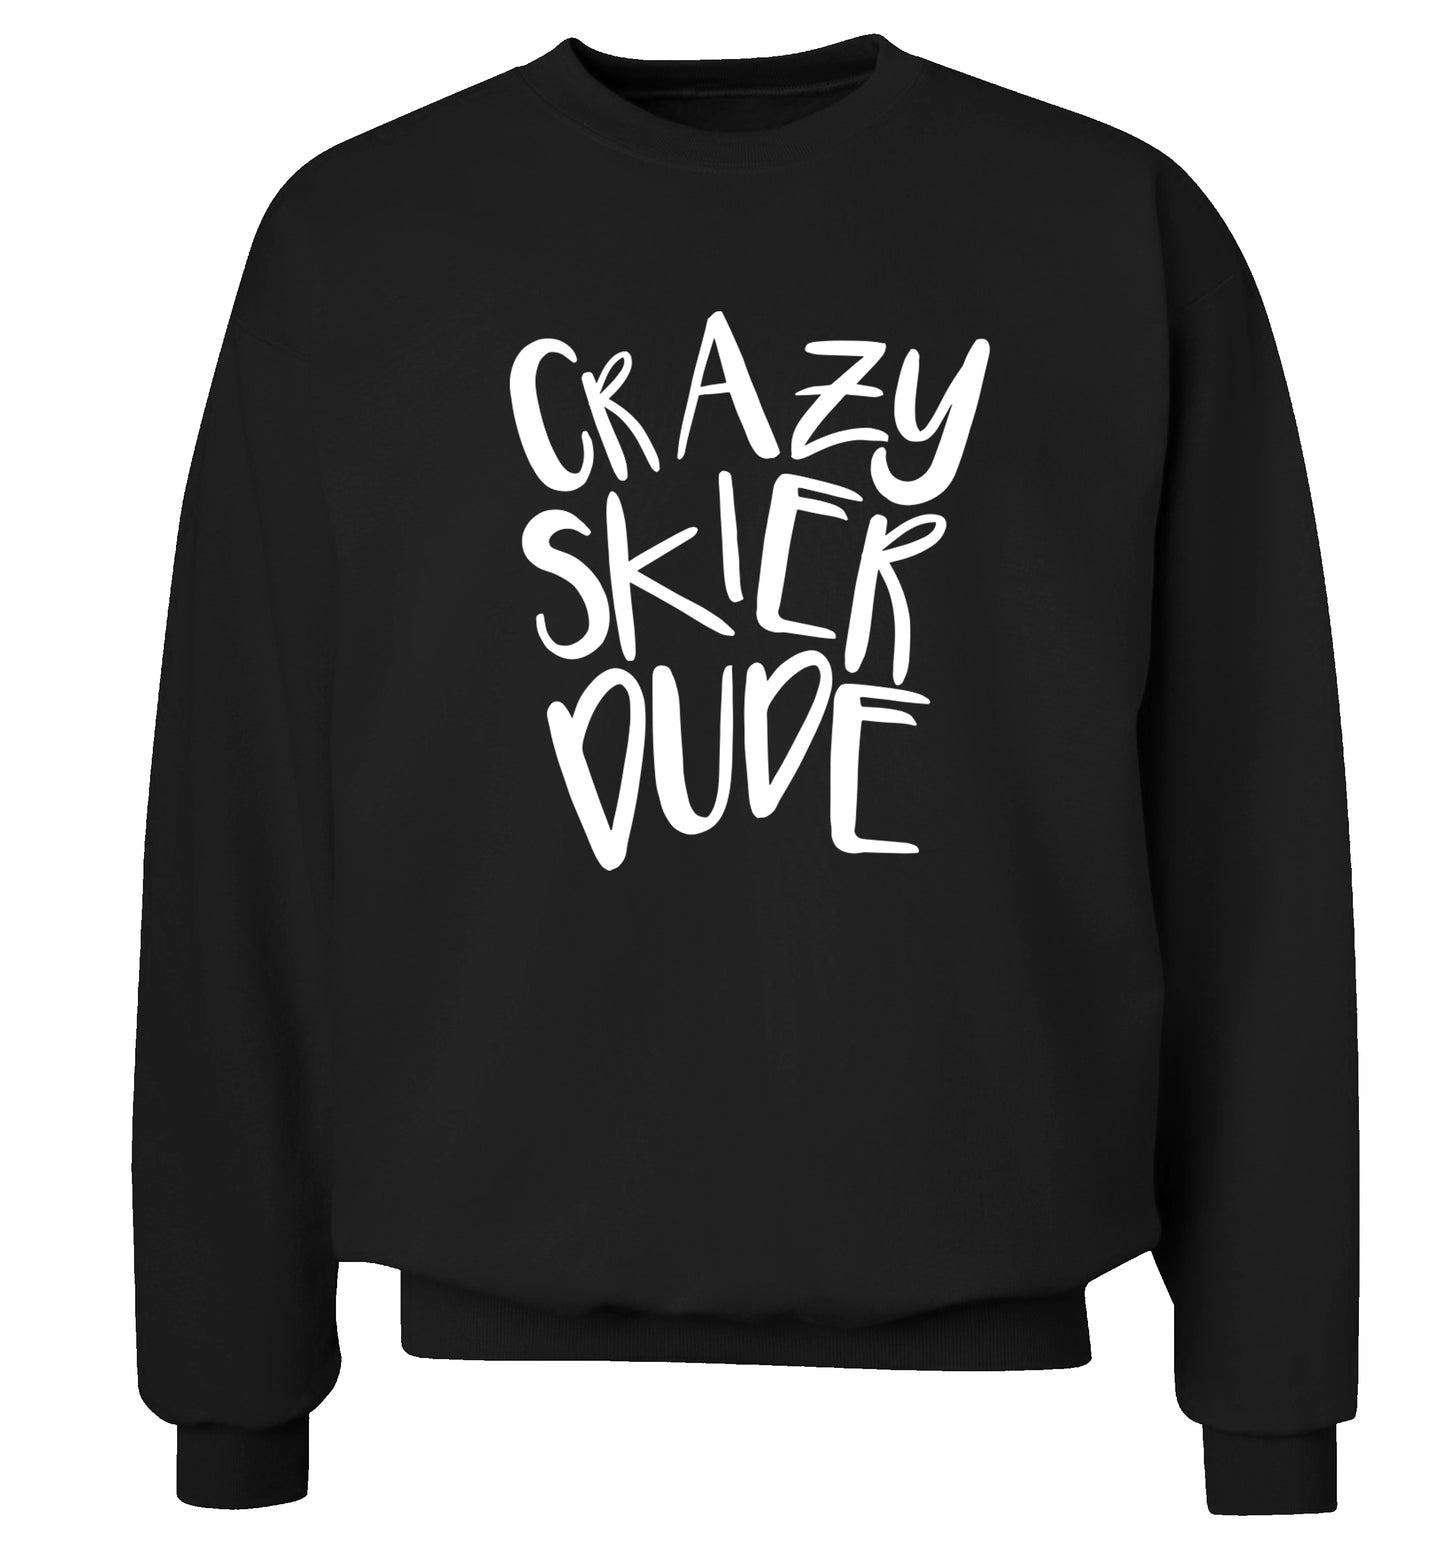 Crazy skier dude Adult's unisexblack Sweater 2XL